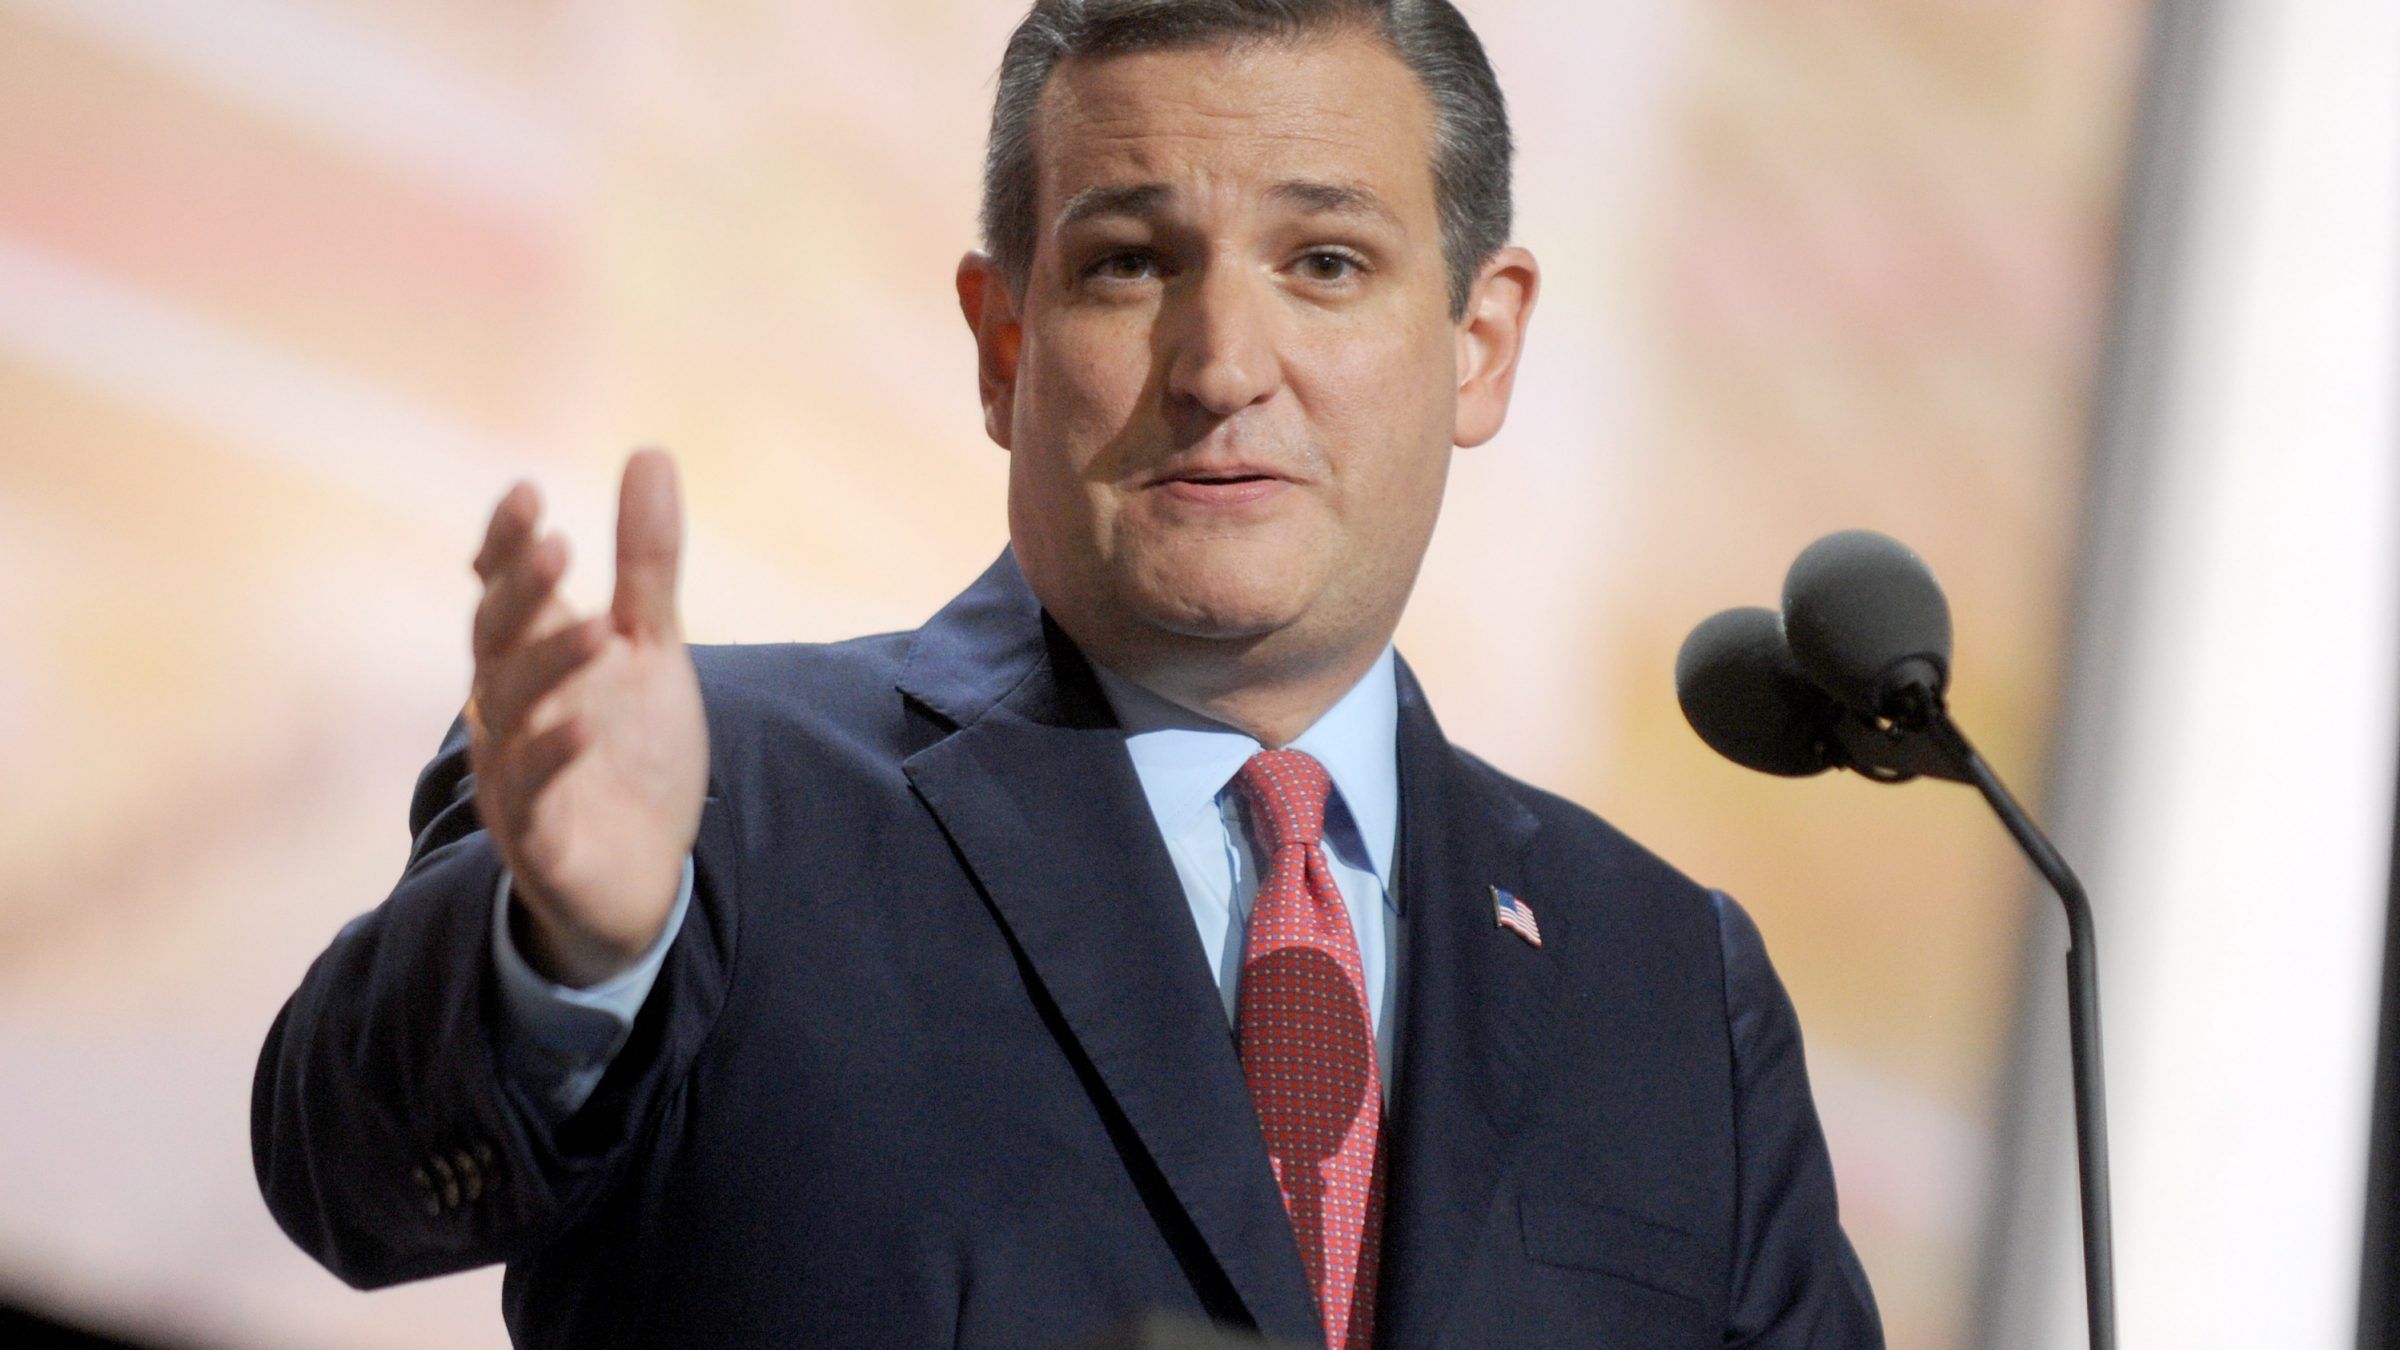 Ted Cruz Senator from Texas